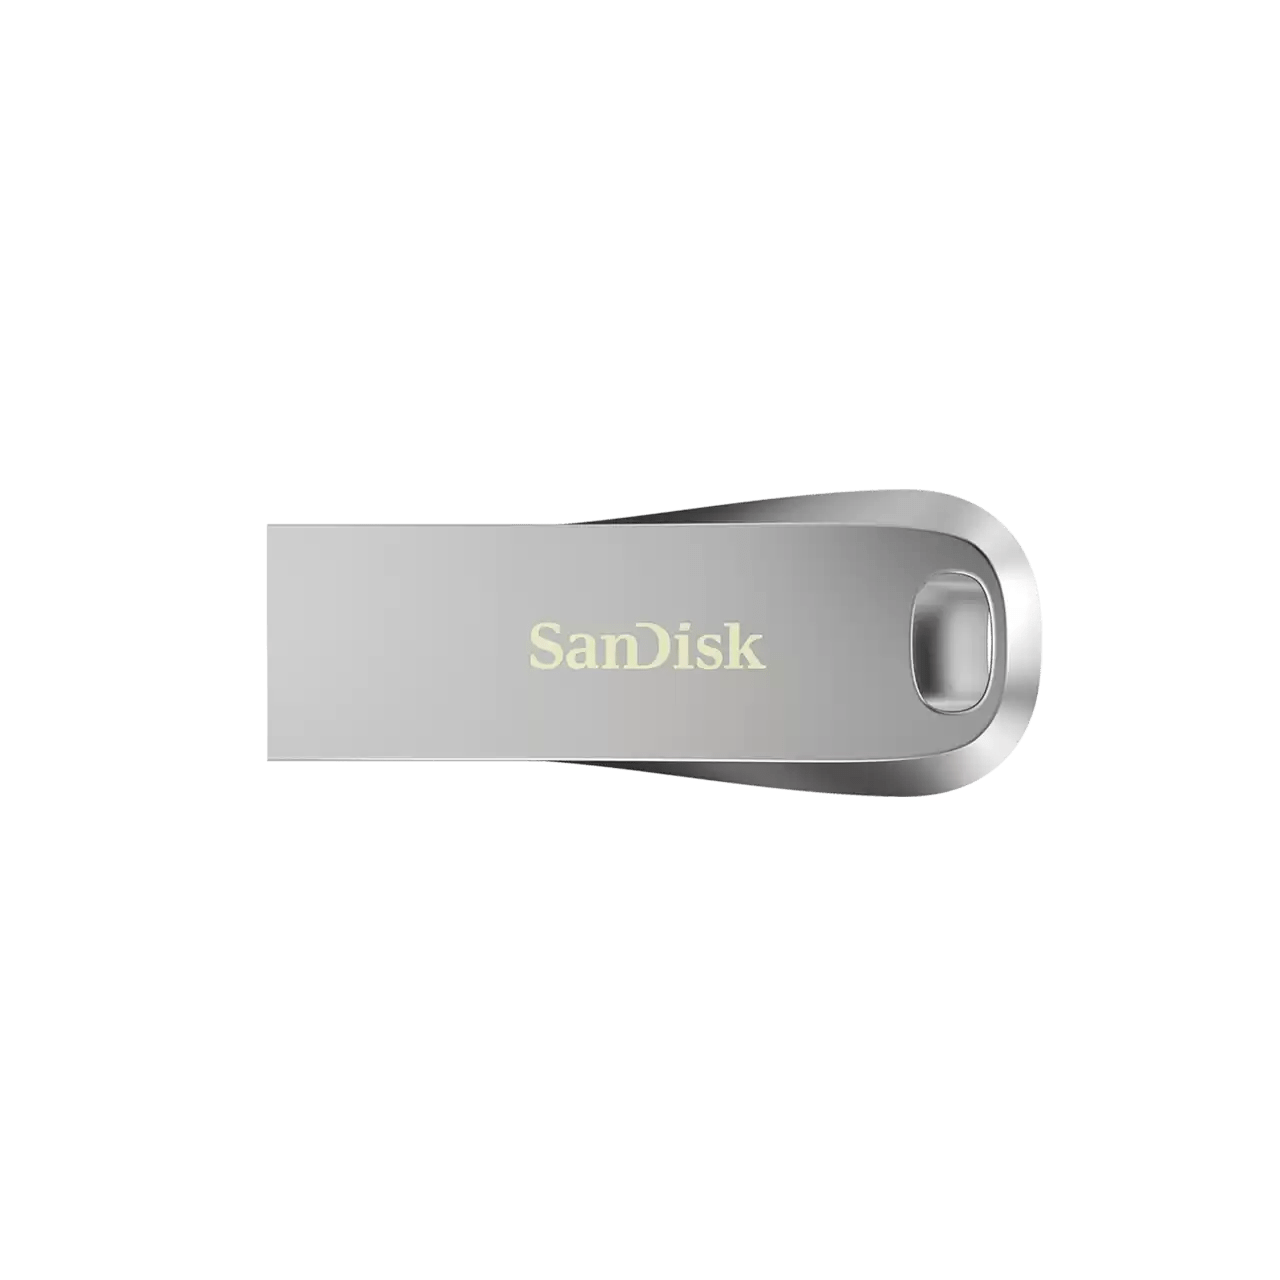 SanDisk 64GB Ultra Luxe USB 3.1 隨身碟 (SDCZ74 - 064G - G46) - Fever Electrics 電器熱網購平台